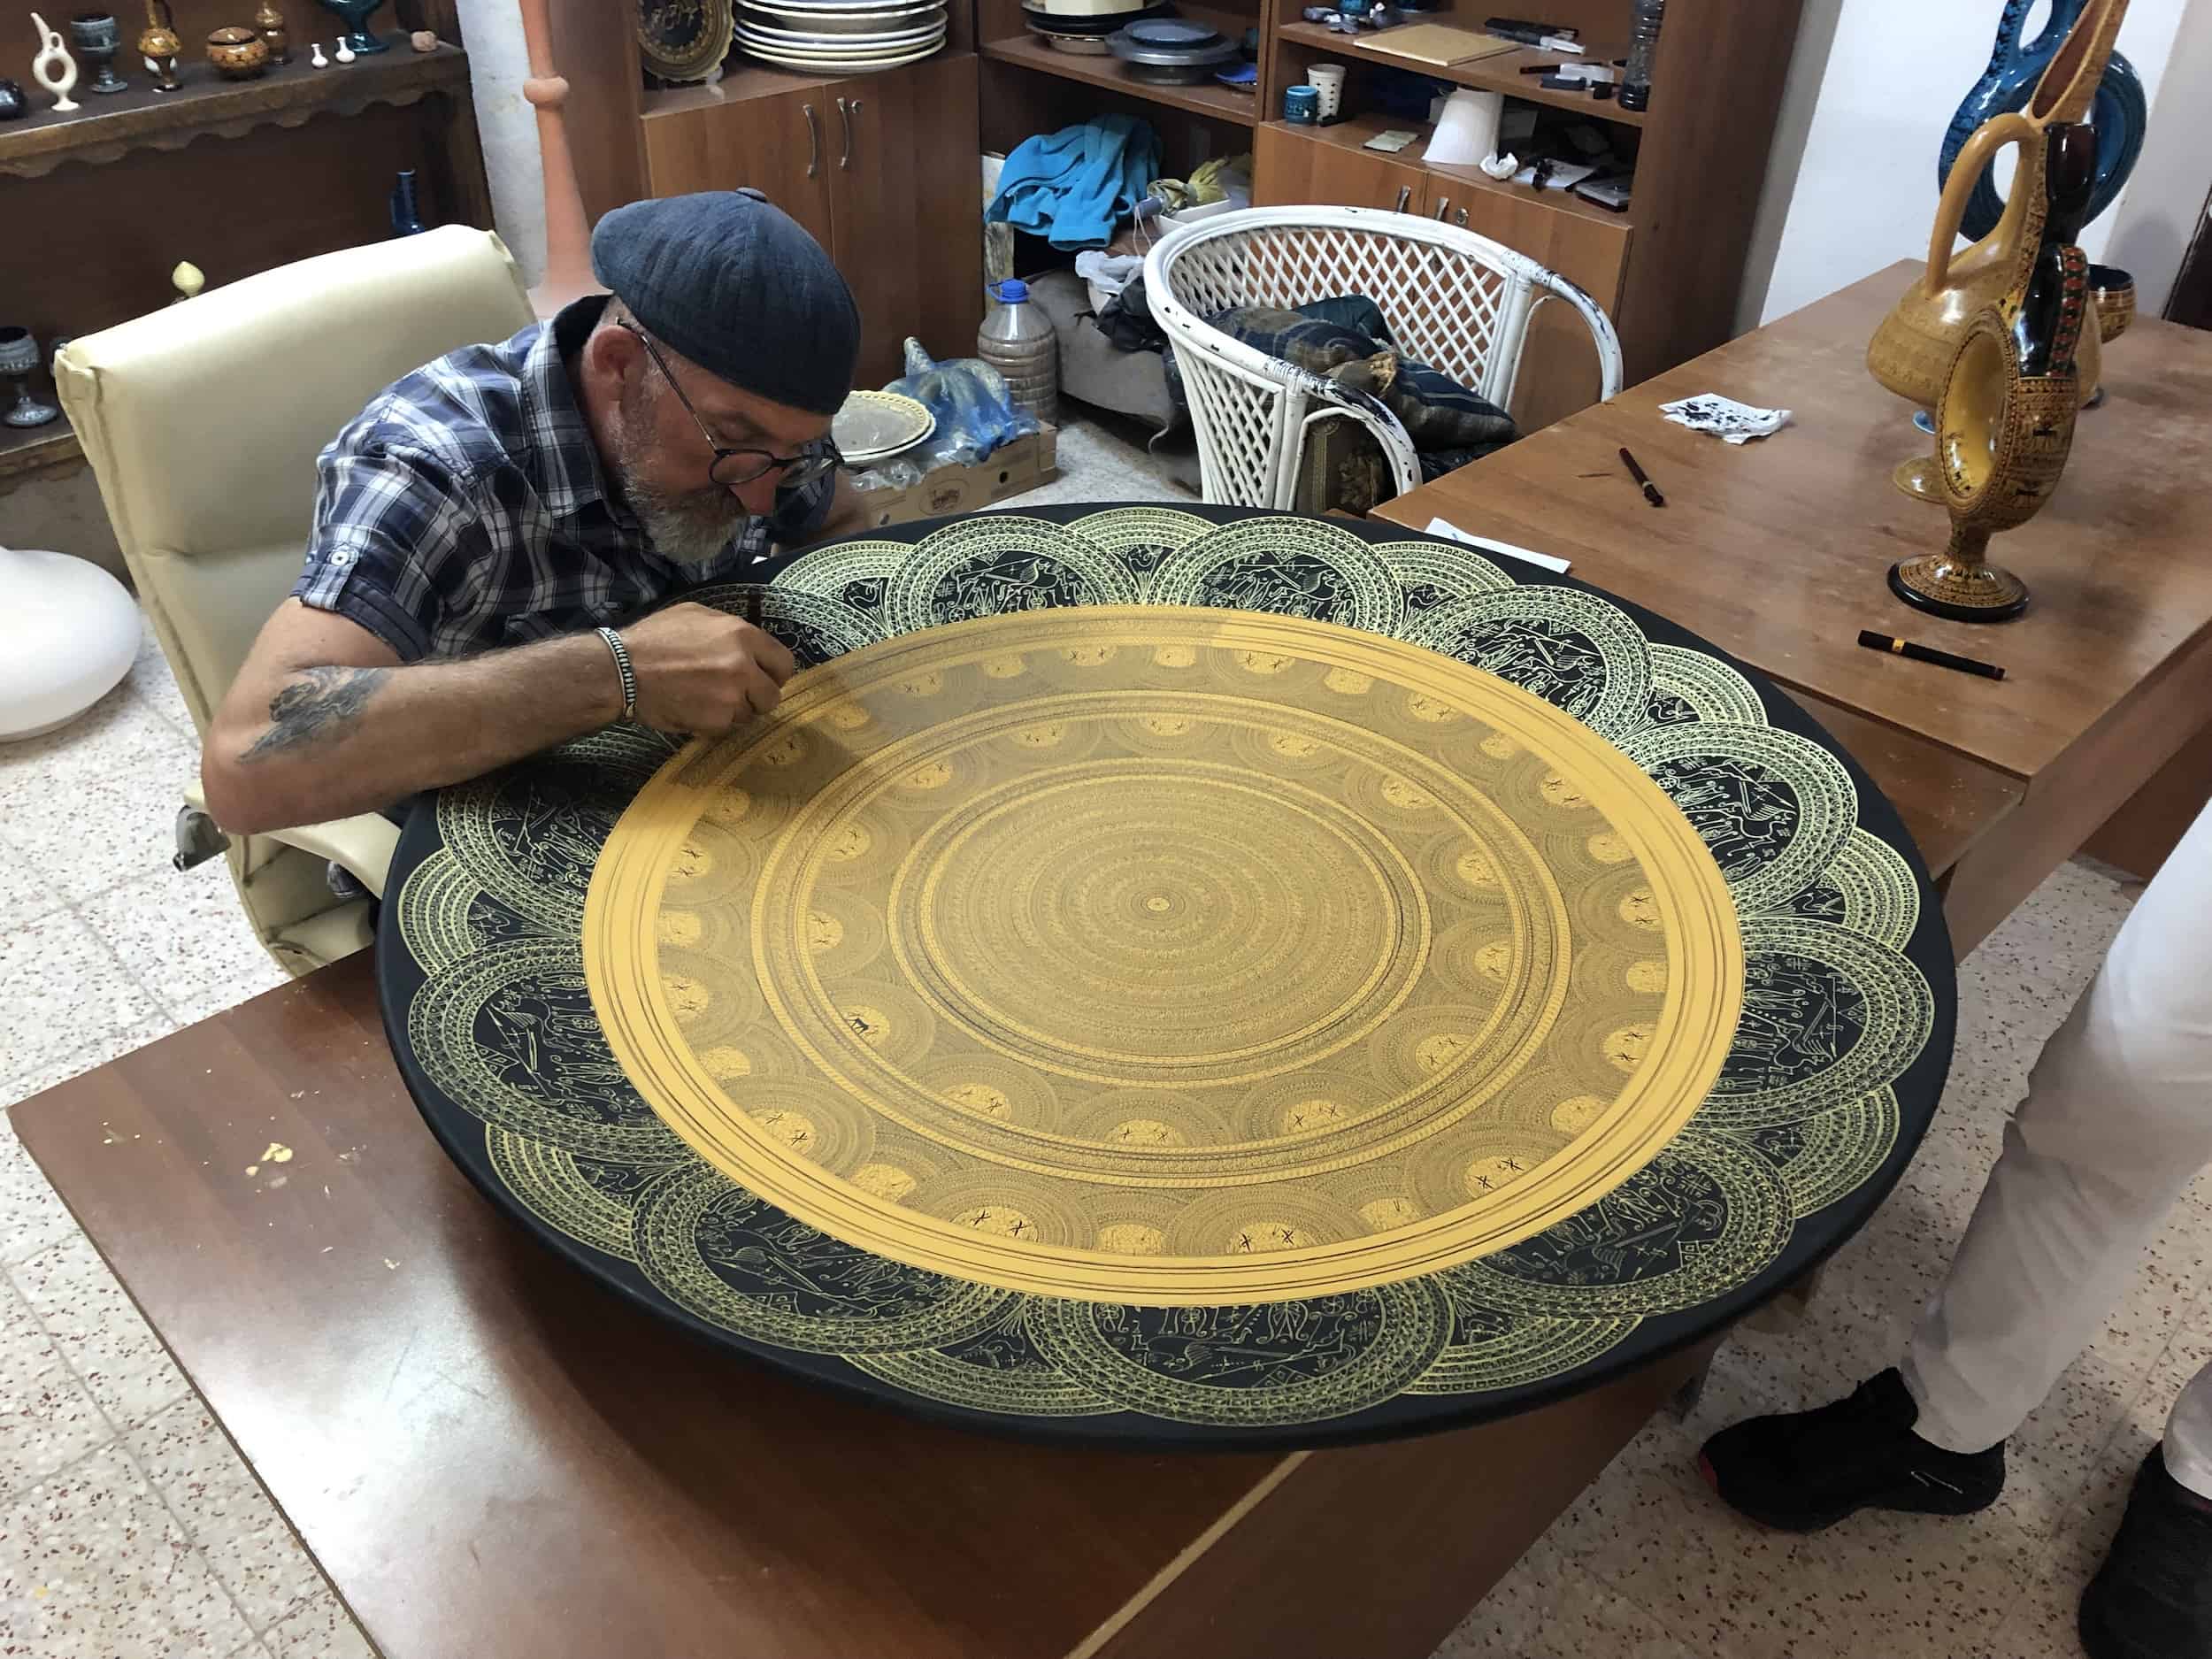 Ceramic artist working on his masterpiece at Venessa Seramik in Avanos, Cappadocia, Turkey